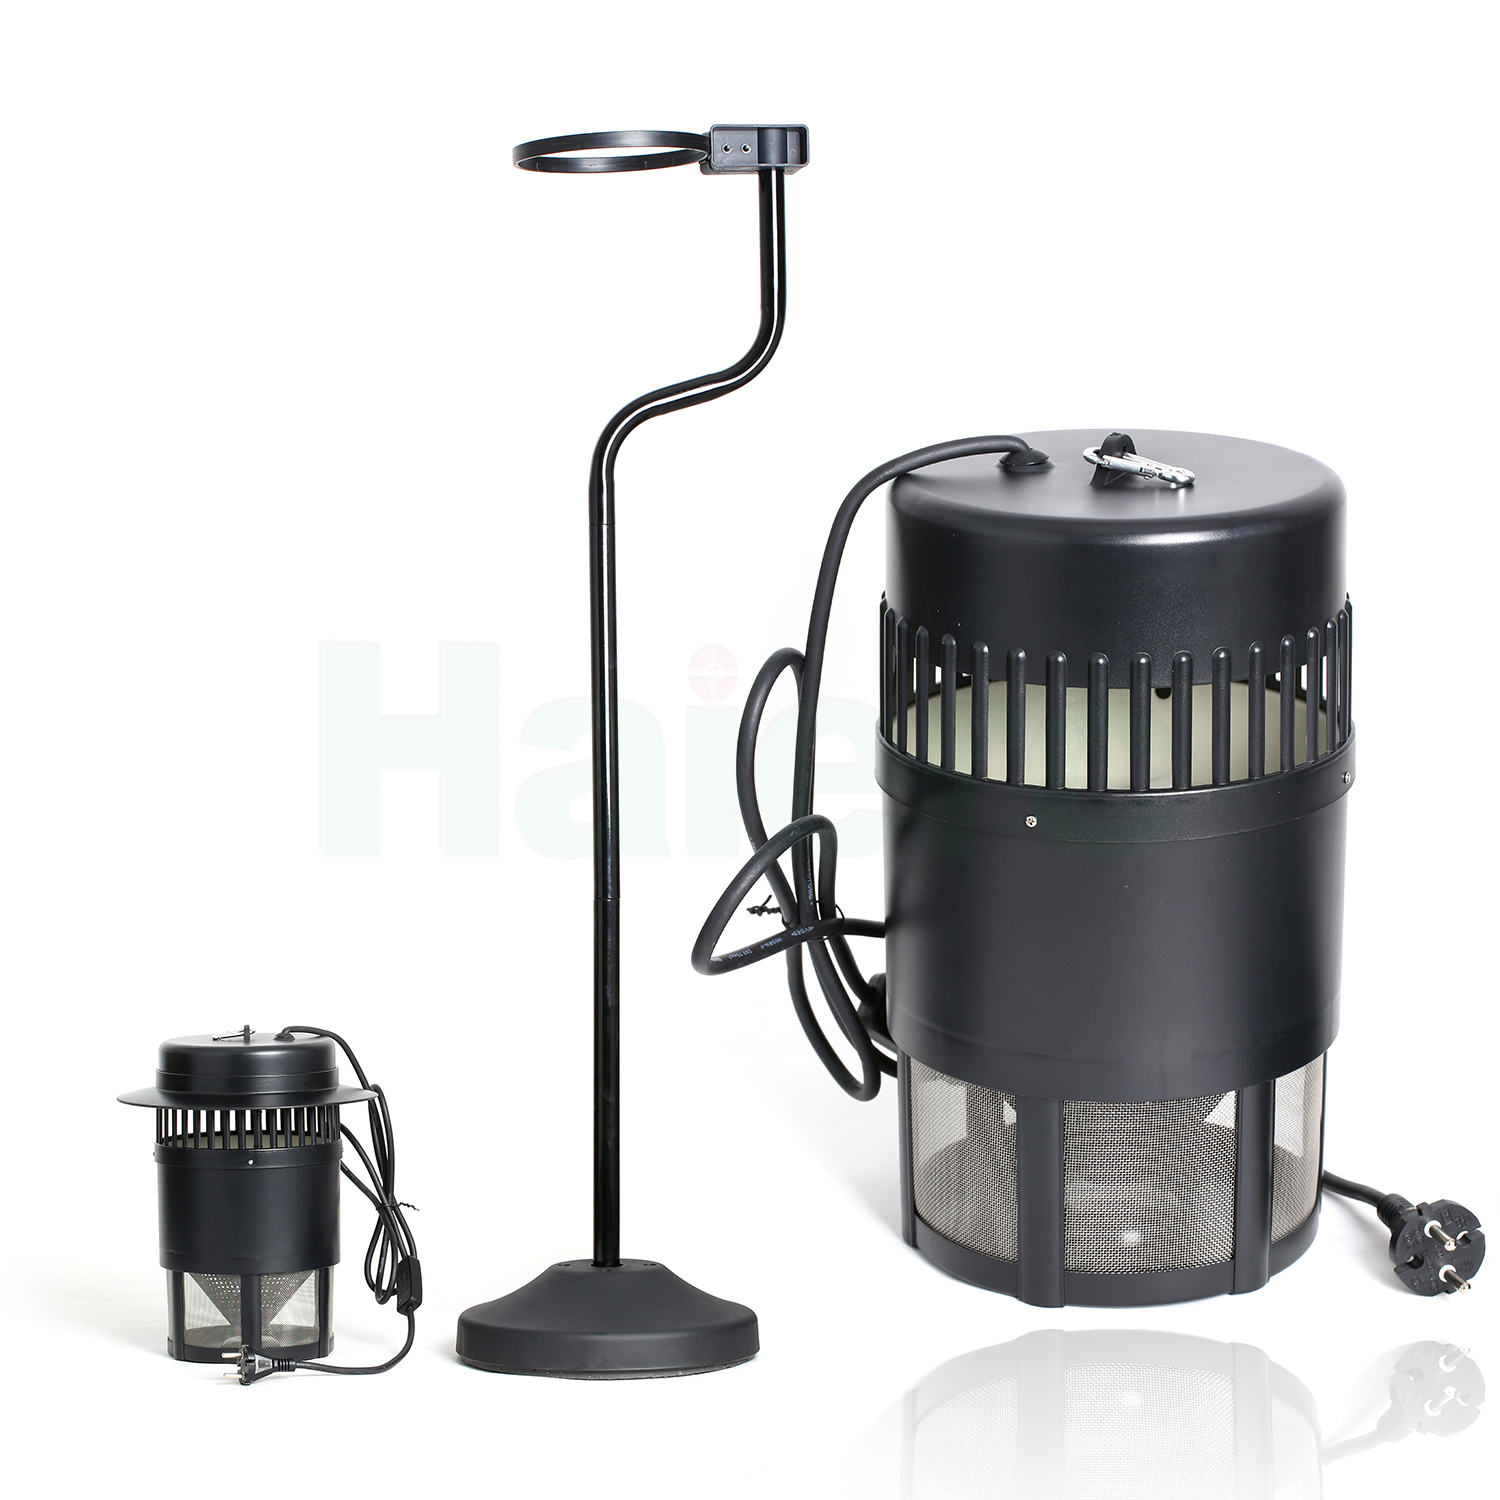 >Haierc oudoor photocatalyst mosquito killer light anti-mosquito lamp HC6117S